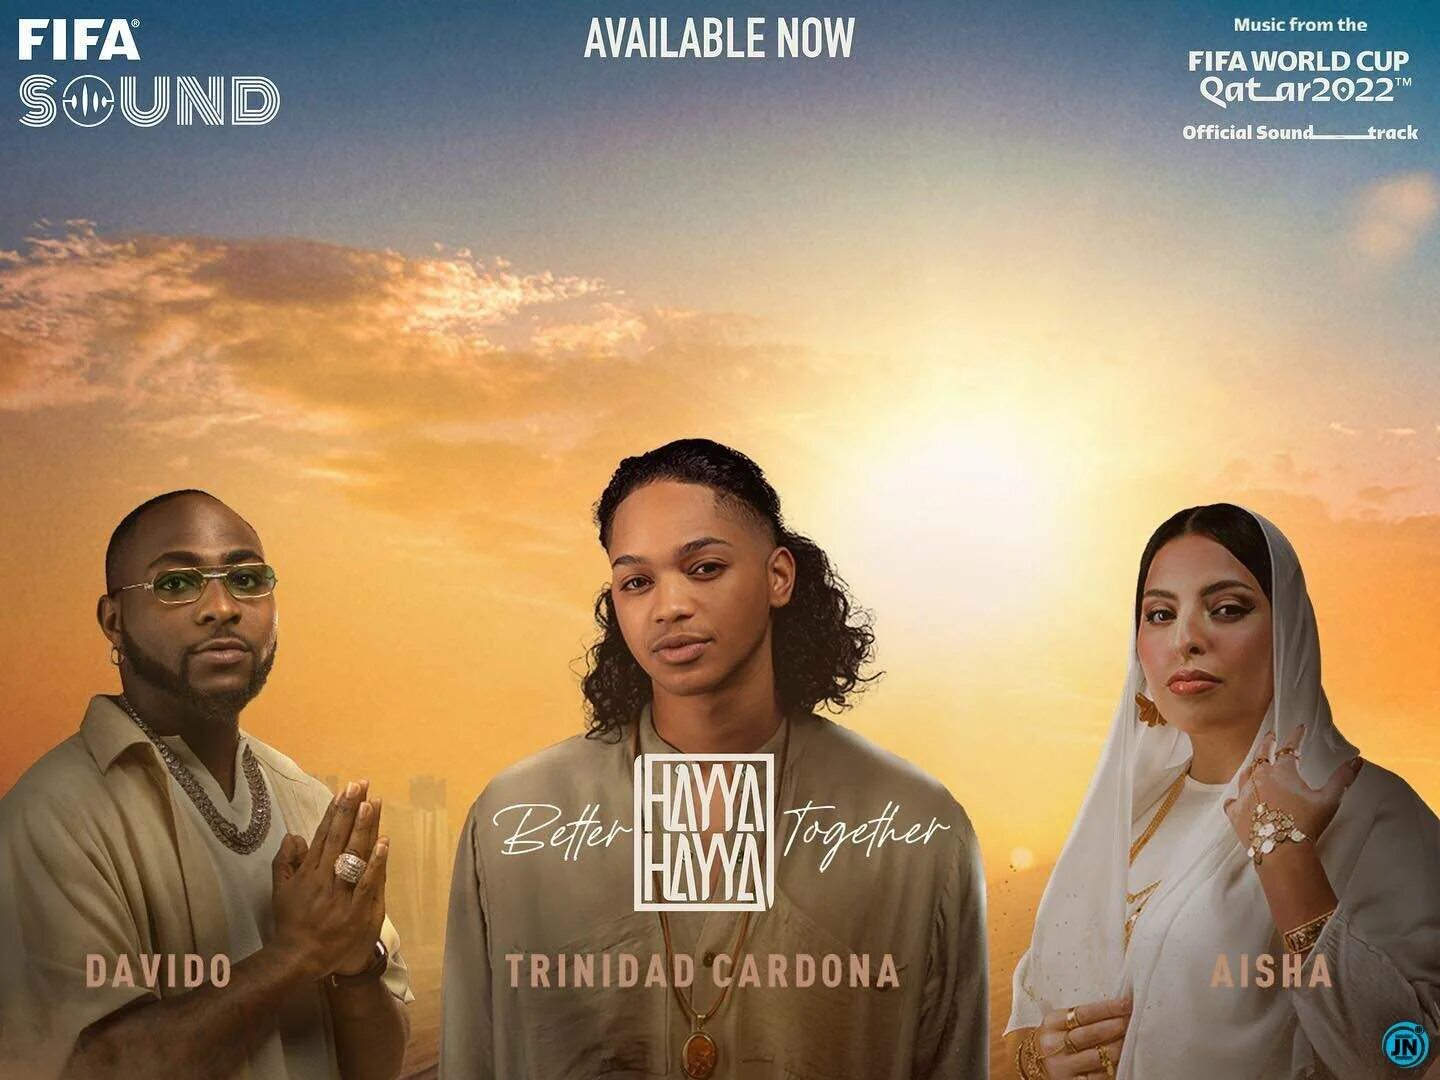 Fifa песня. Trinidad Cardona биография. Trinidad Cardona, Music. FIFA Qatar. Music Qatar 2022 Official Music.